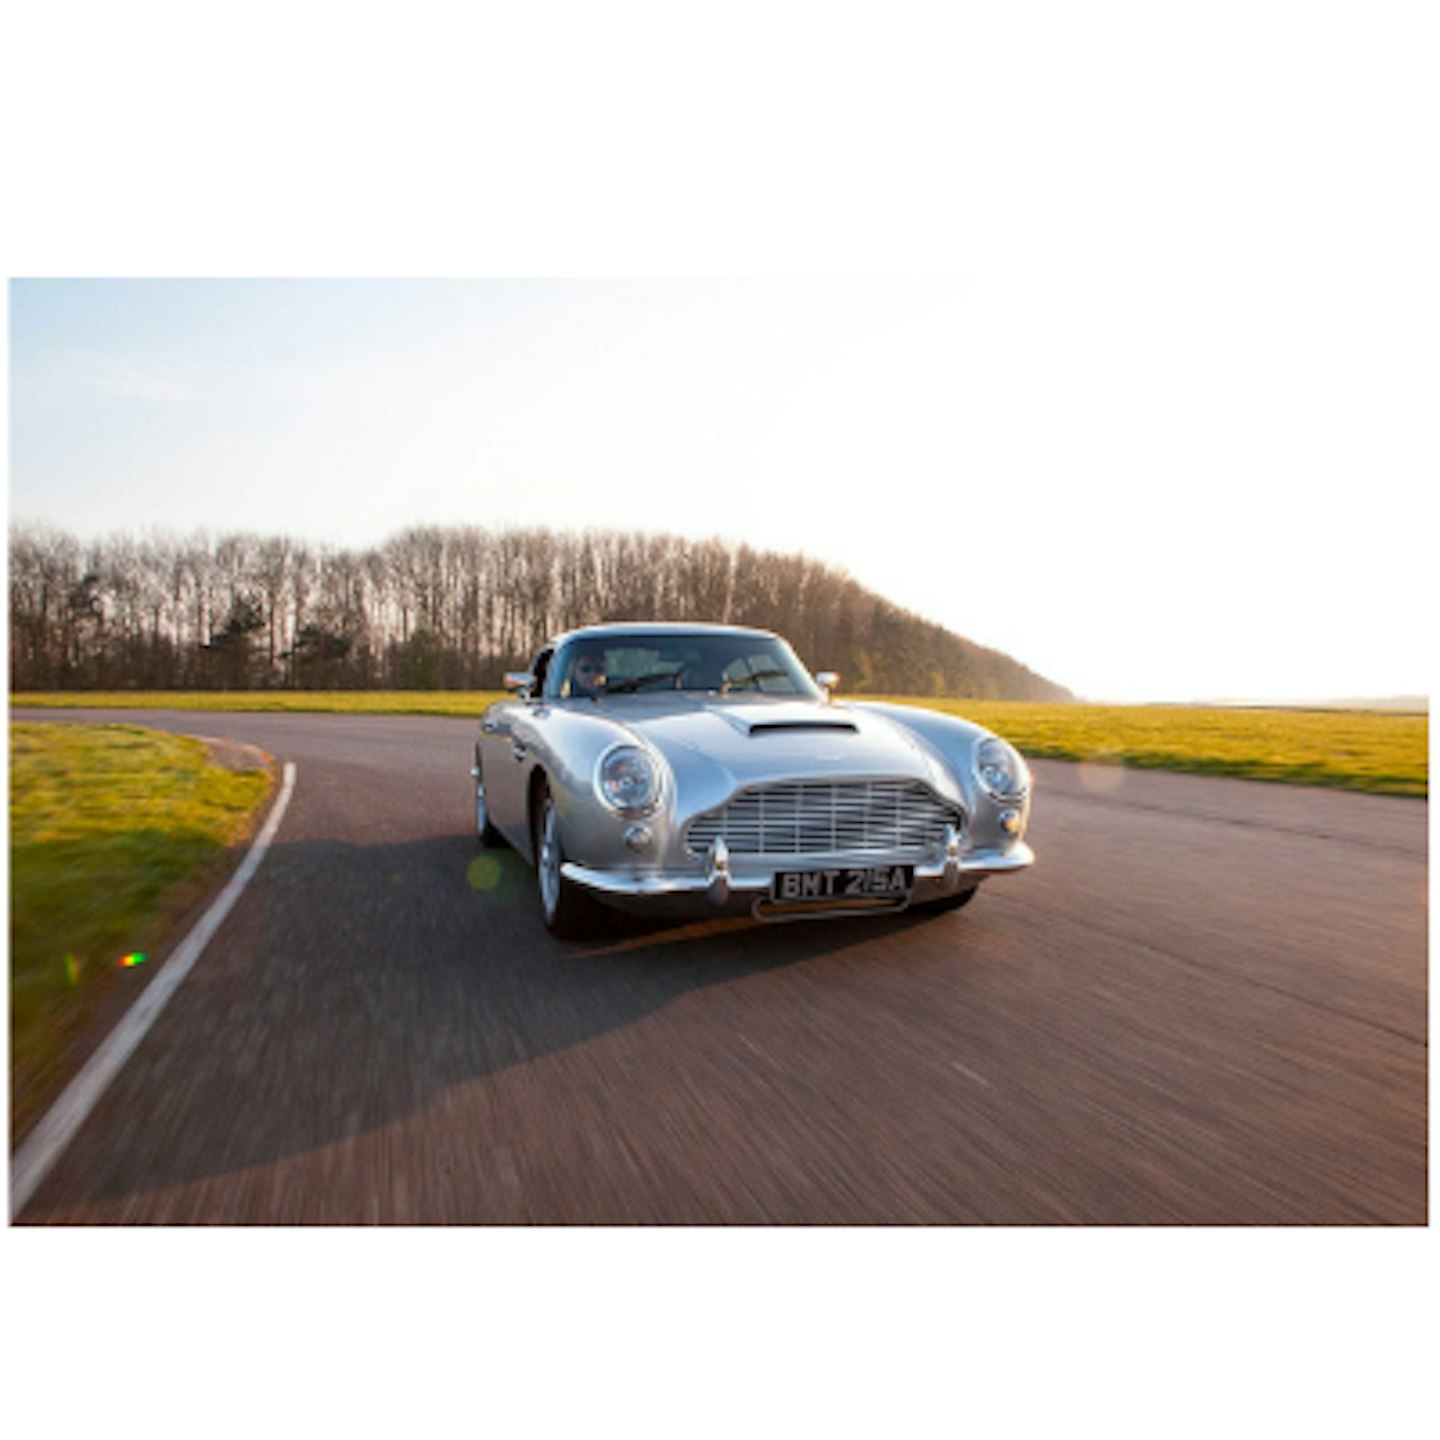 Drive An Aston Martin Replica DB5 and V8 Vantage